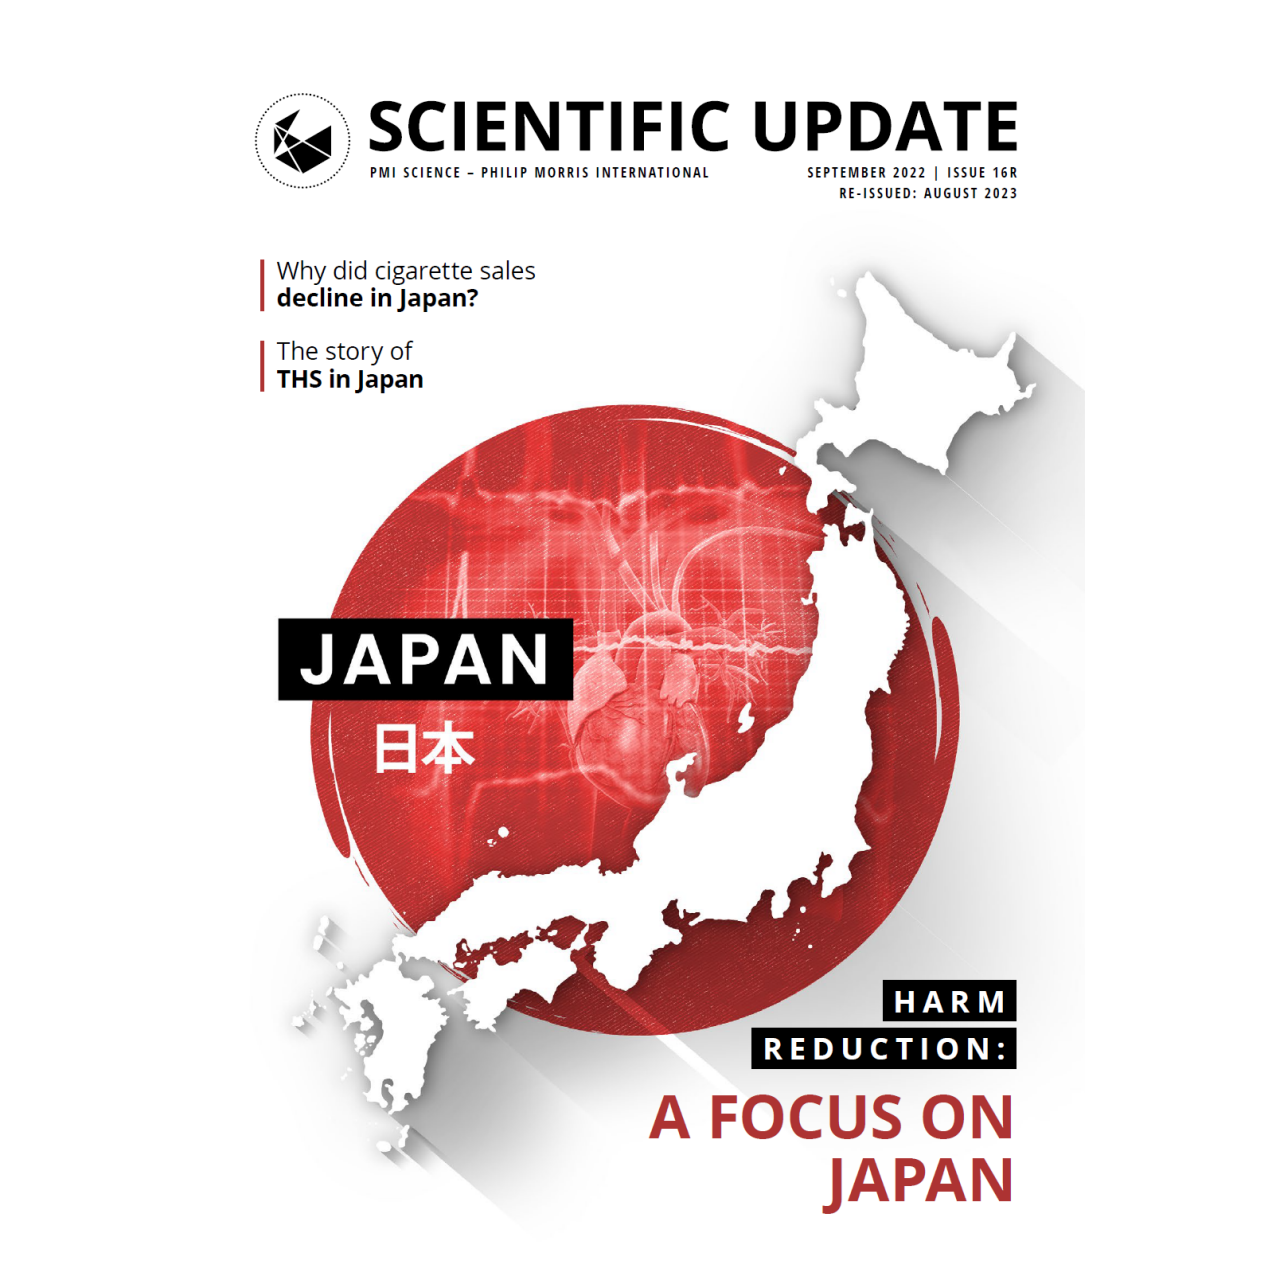 Scientific Update 16: Harm reduction: A focus on Japan